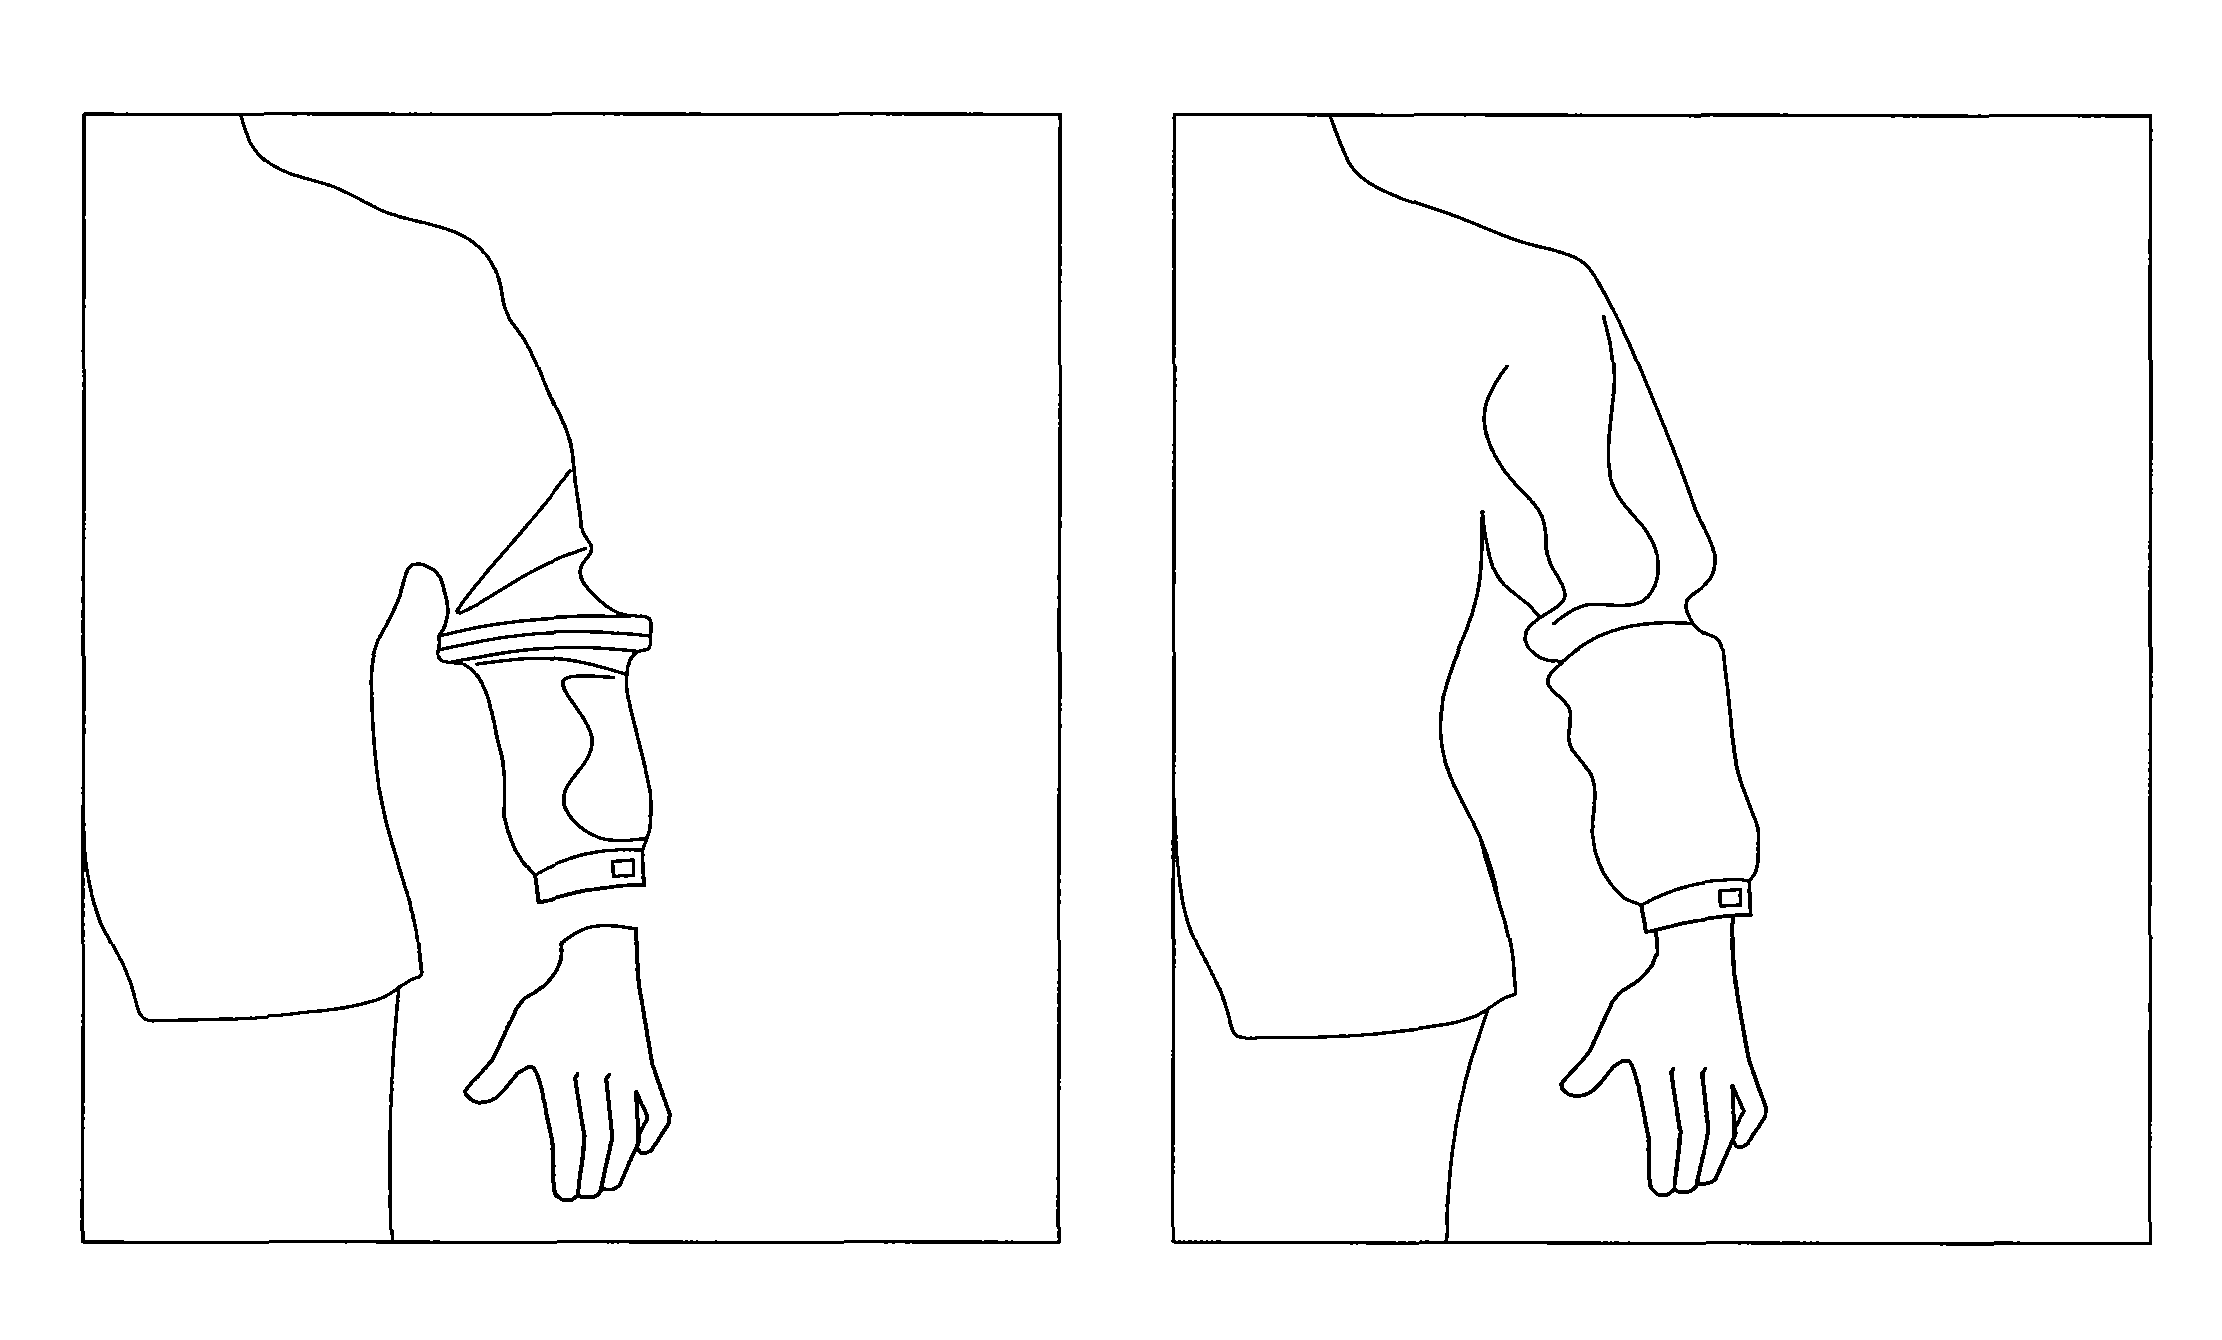 Method of simulating clothing using long range attachments